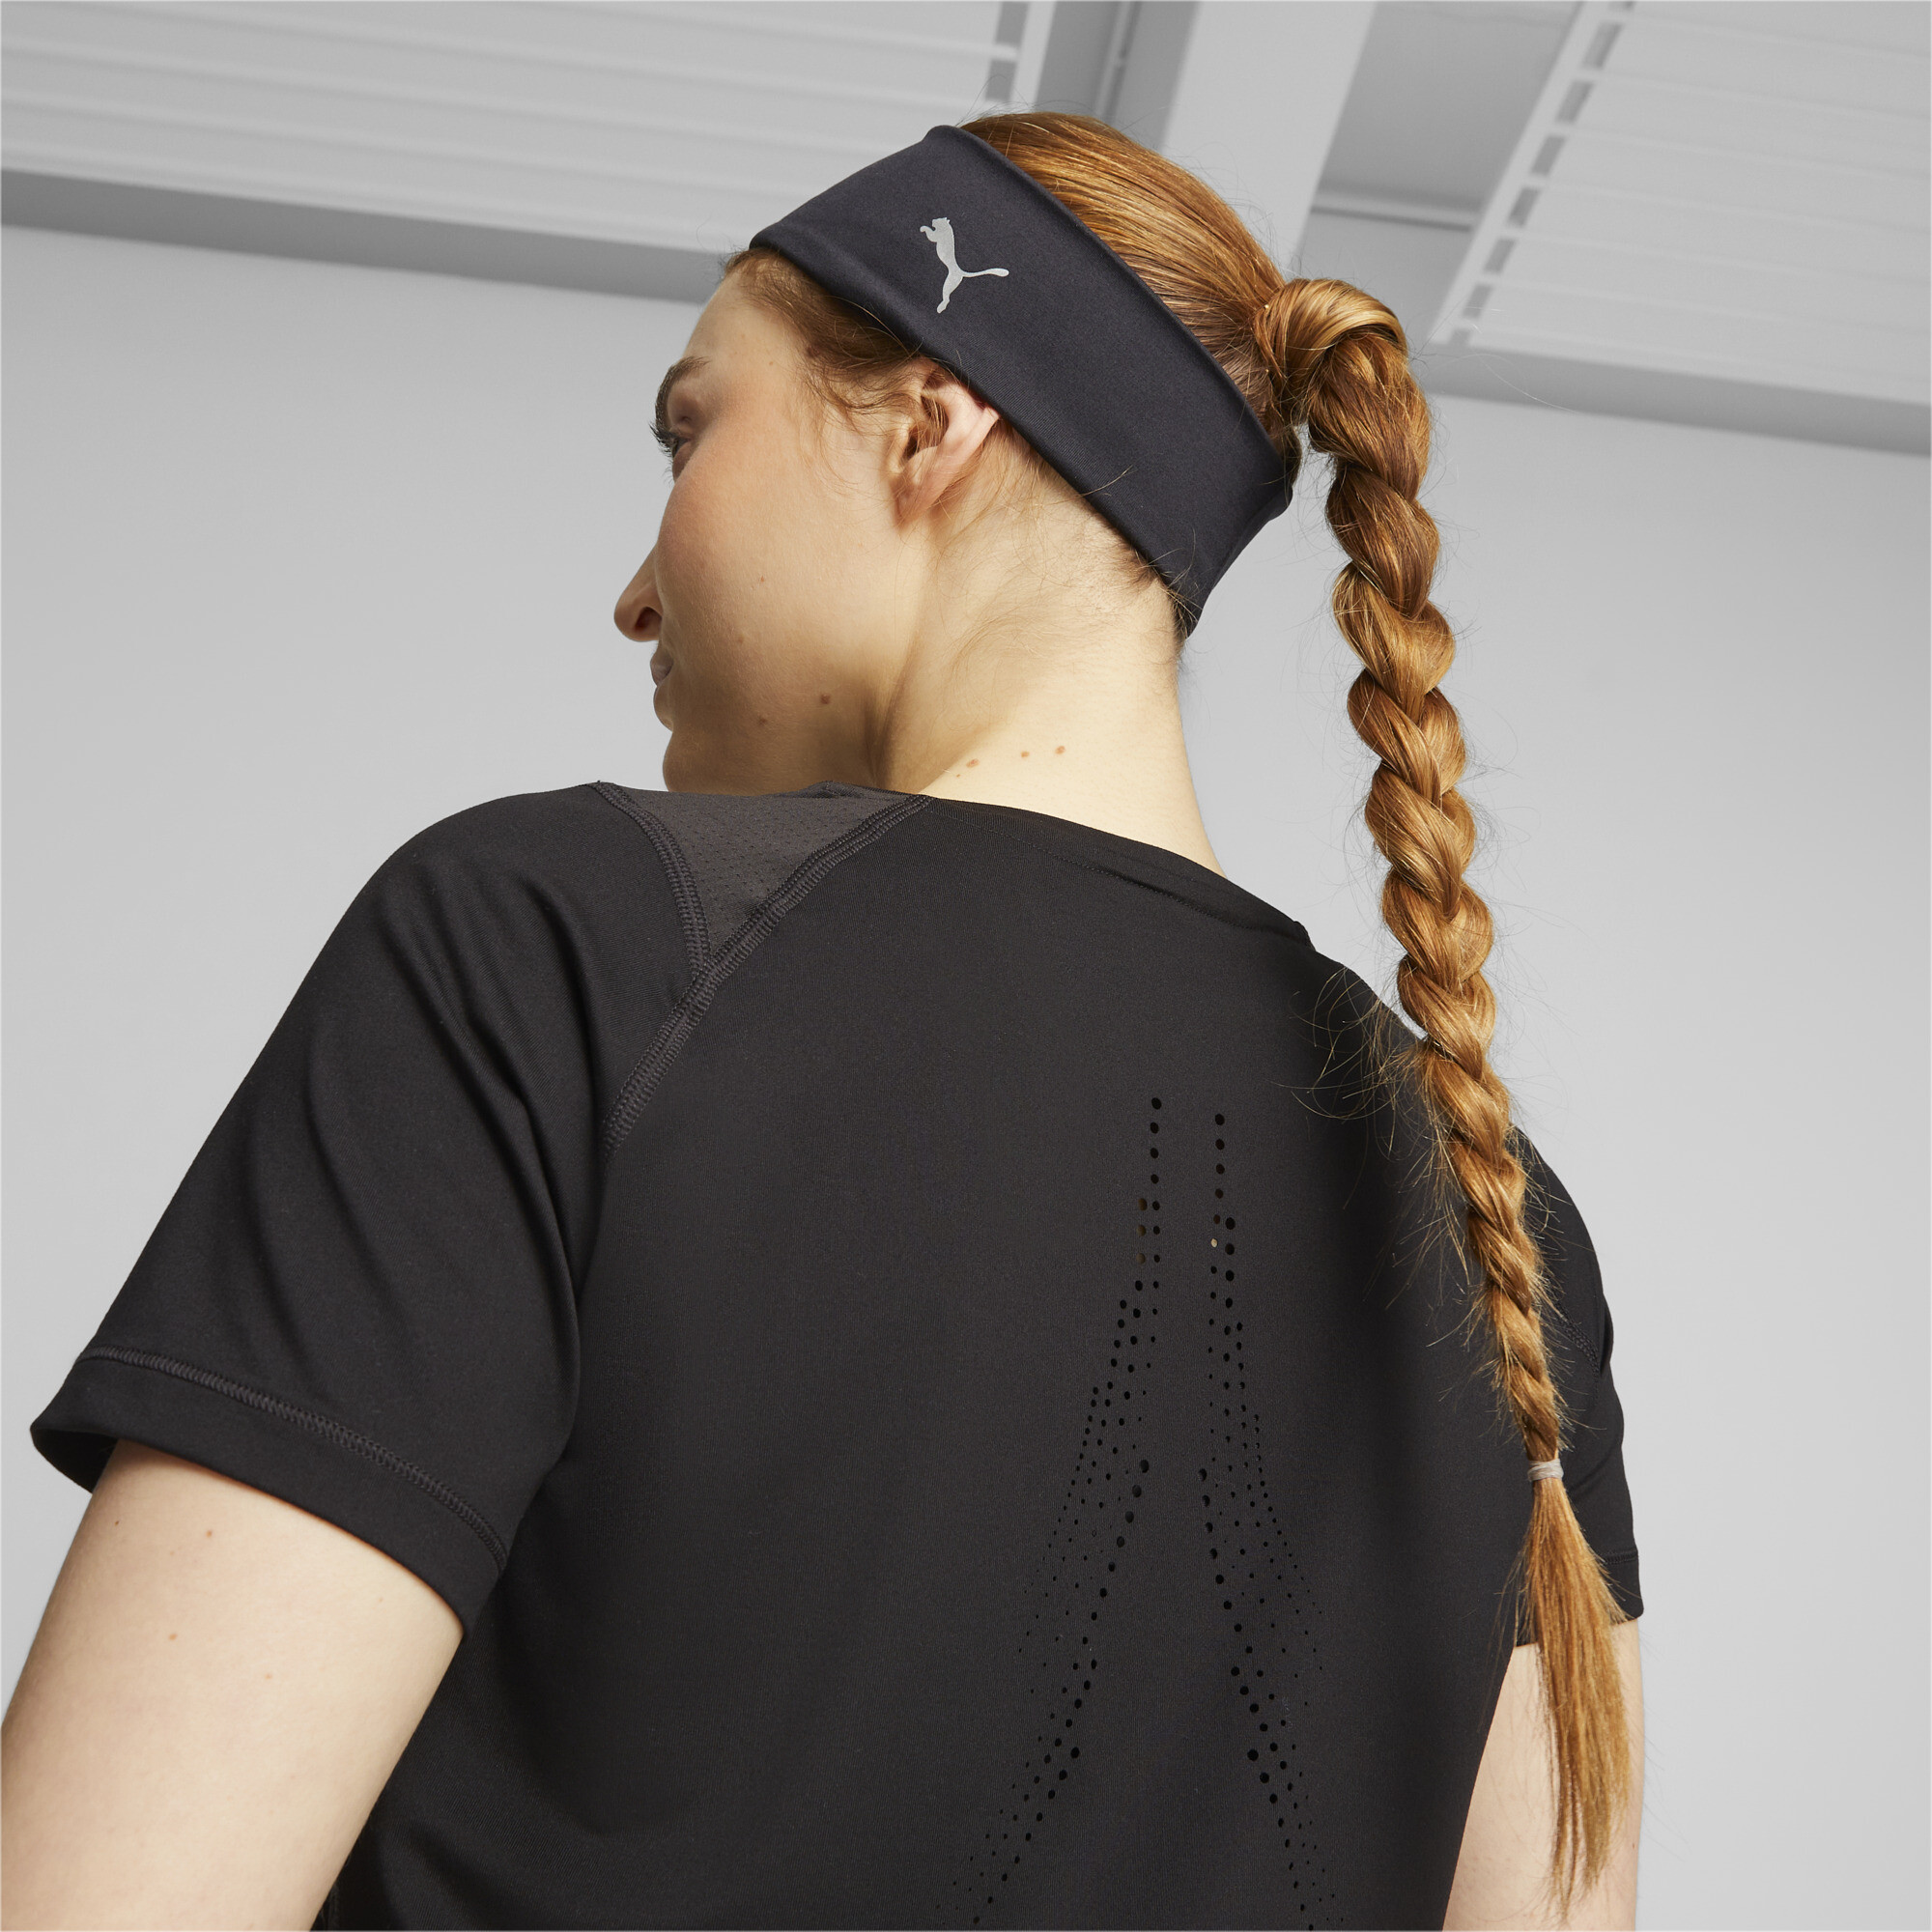 Puma Training Headband, Black, Size Adult, Sport